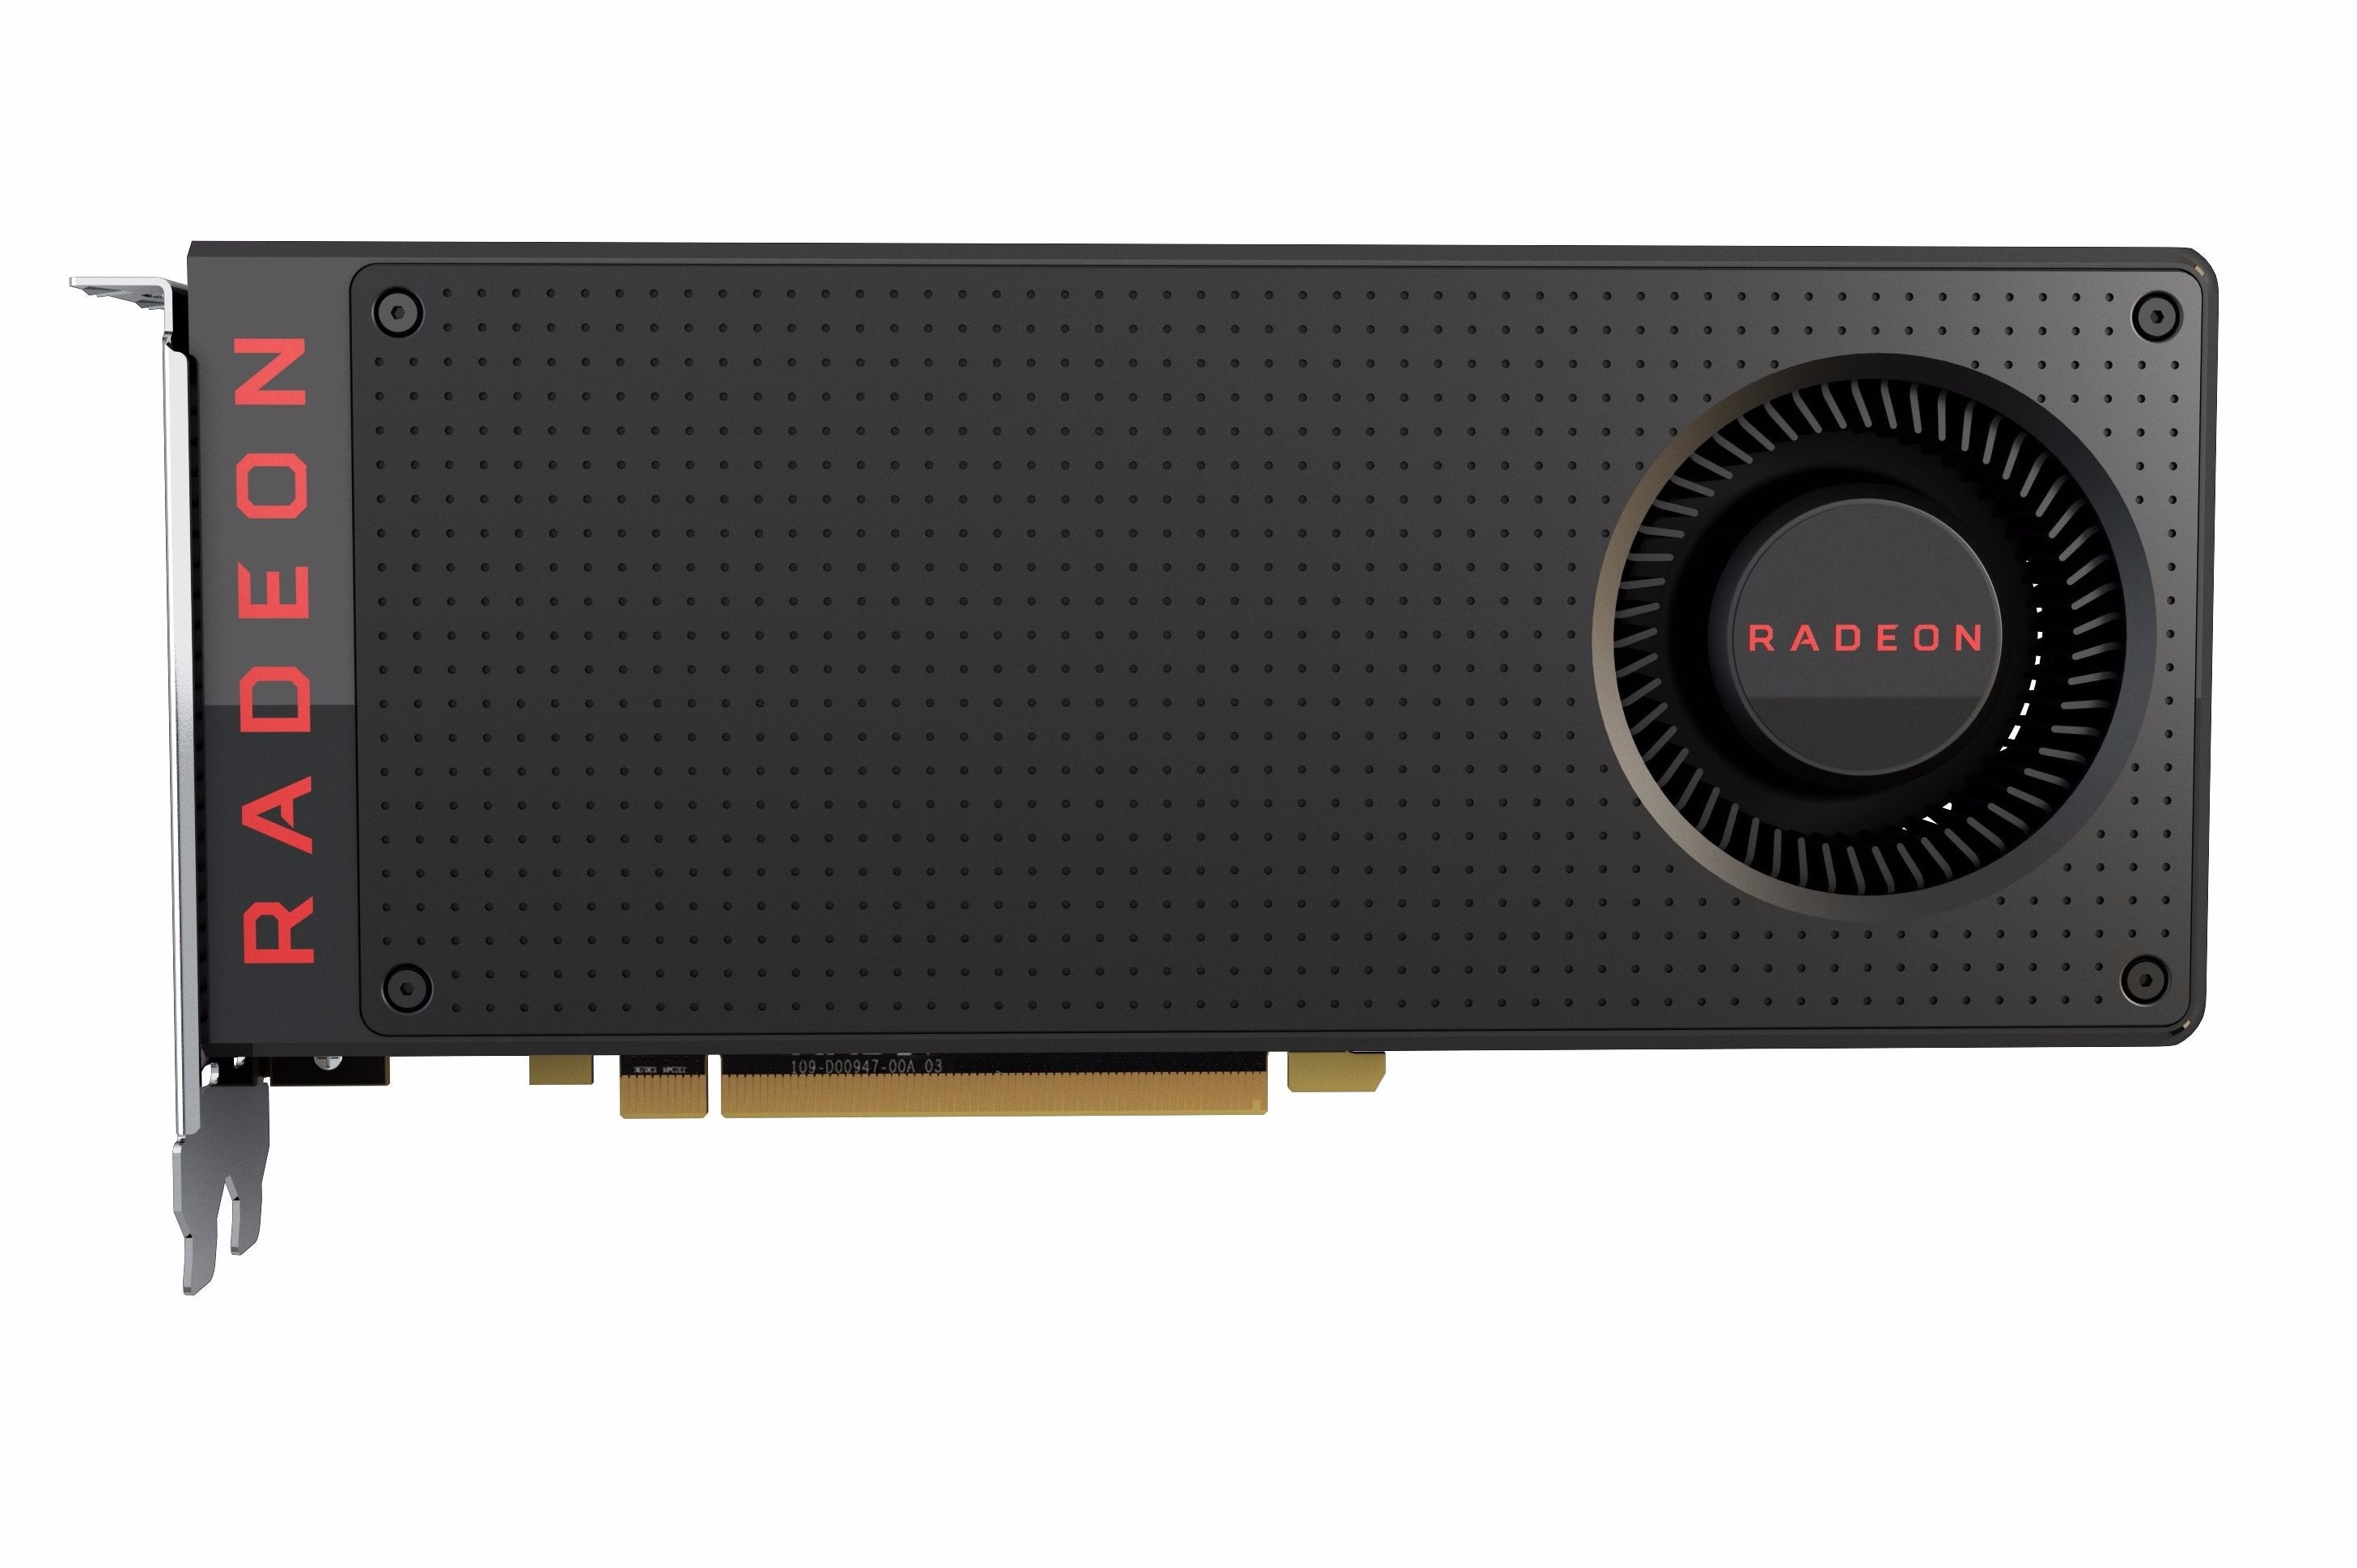 AMD Radeon RX 480 4GB vs 8GB review | Eurogamer.net